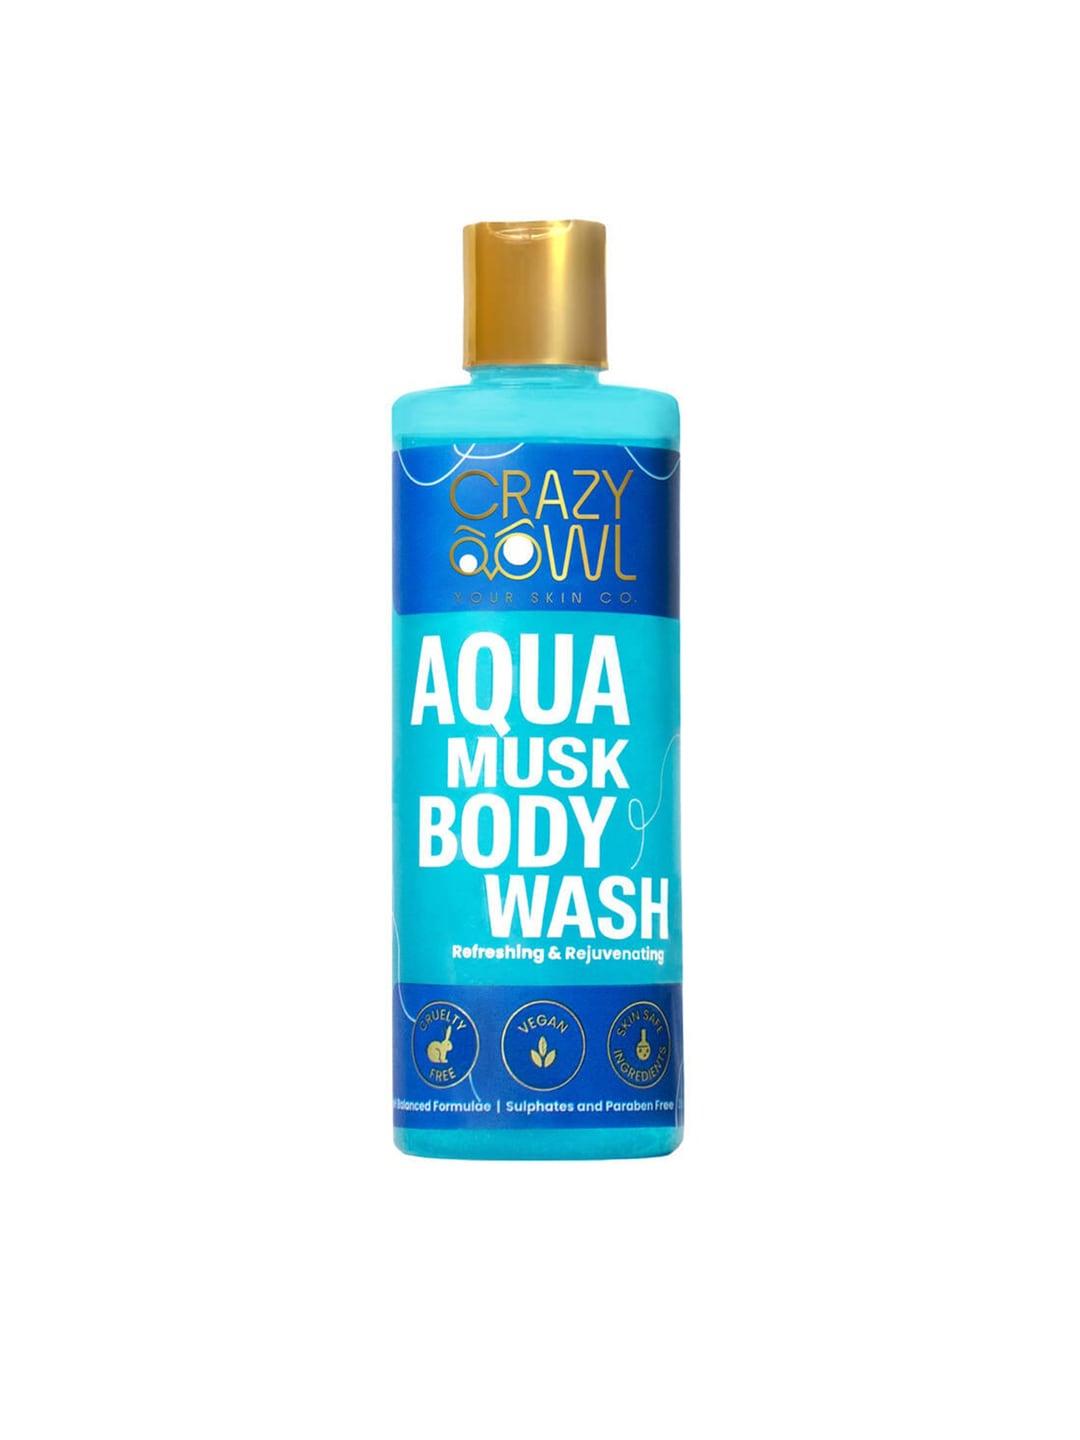 CRAZY OWL Aqua Musk Body Wash For Refreshing & Rejuvinating 250ml